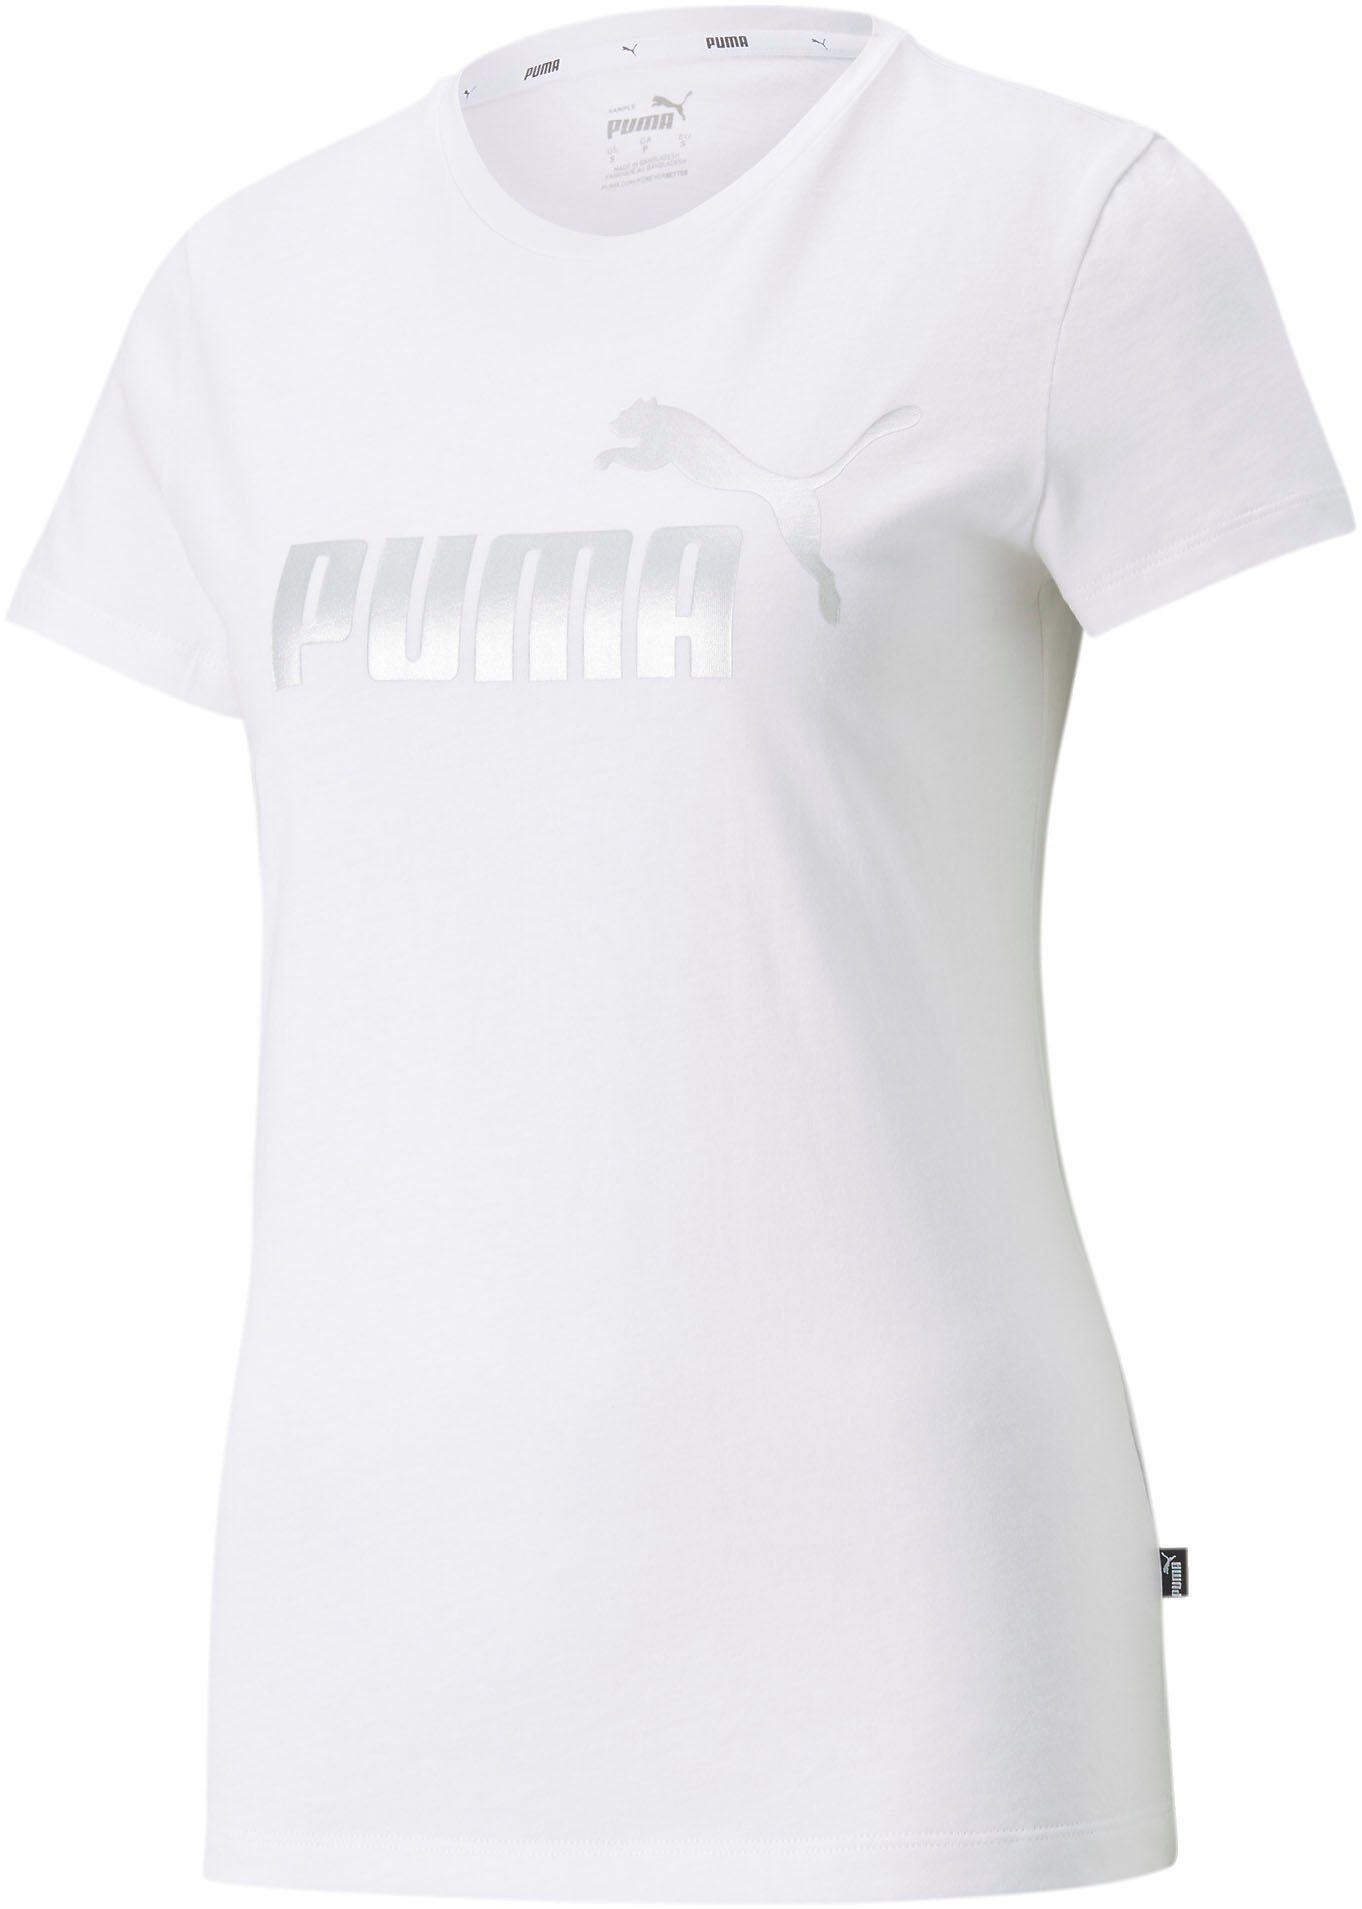 ESS+ TEE Puma White-silver T-Shirt METALLIC metallic LOGO PUMA